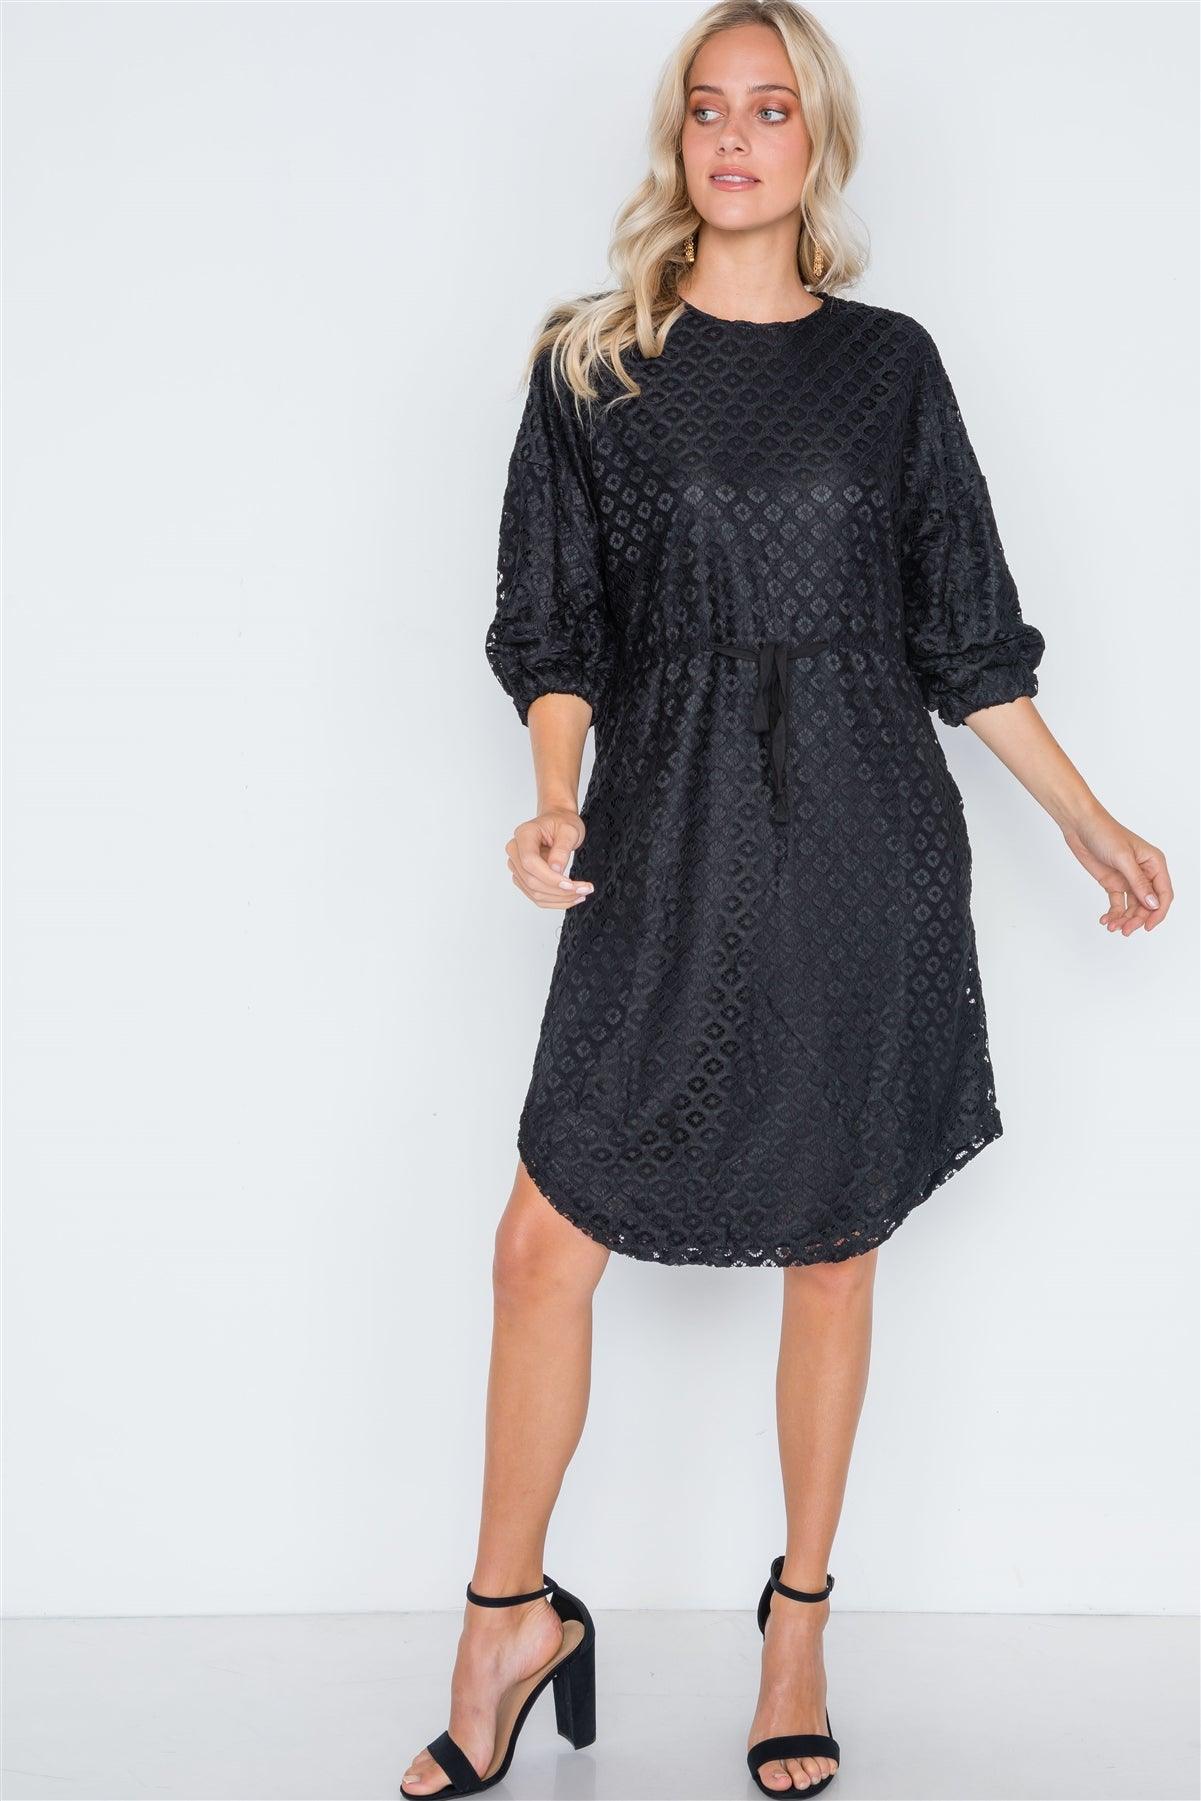 Black 3/4 Sleeve Patterned Lace Shift Dress /3-2-1